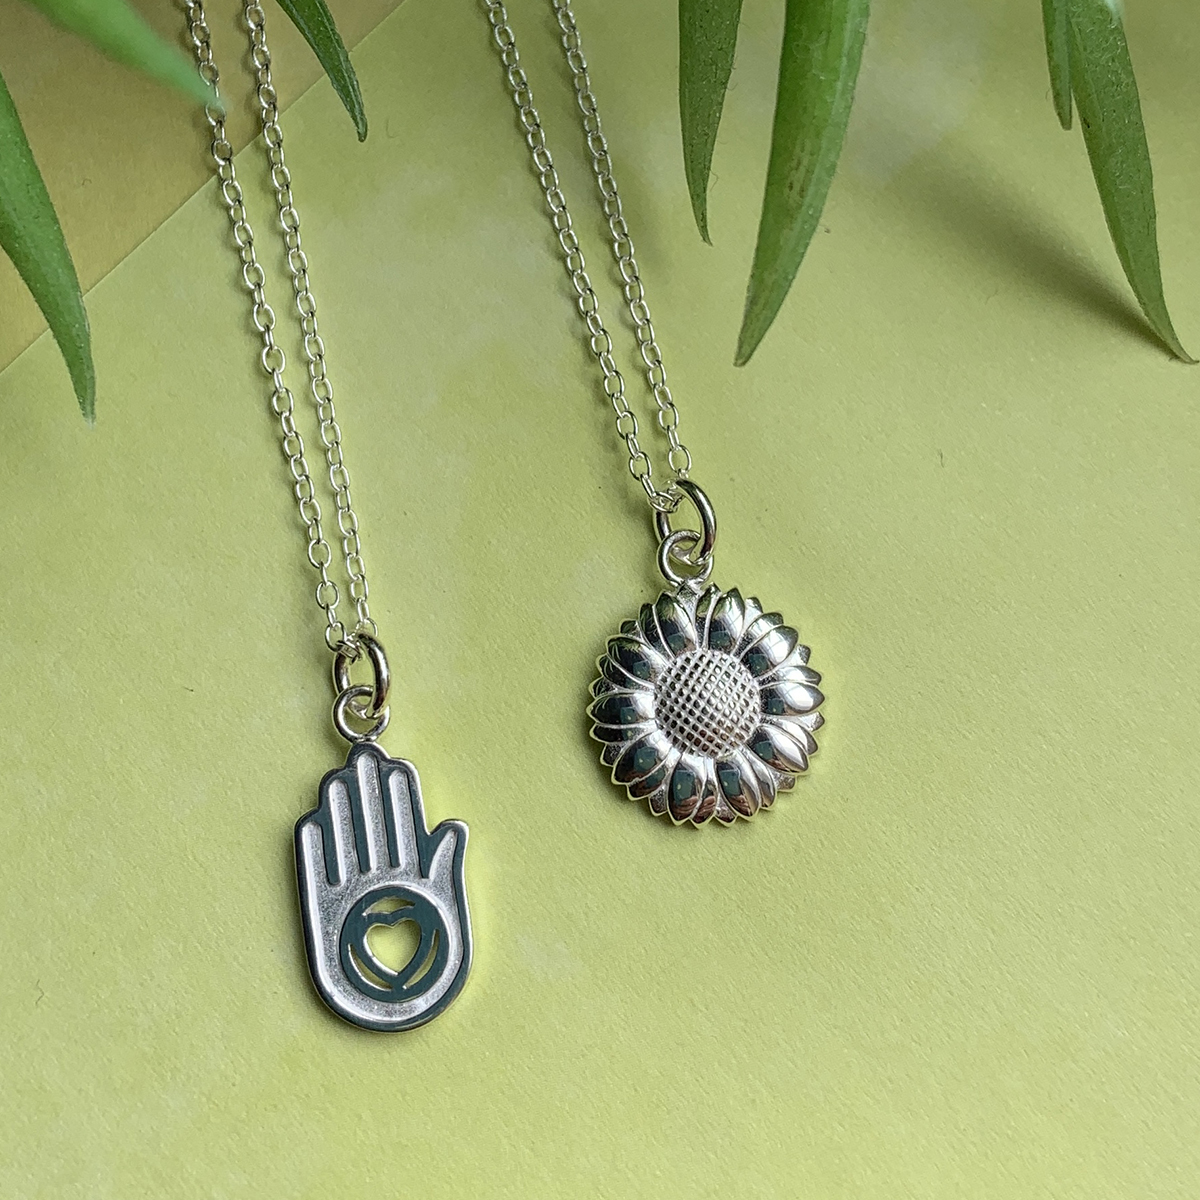 Mantra Jewellery Symbol Necklaces